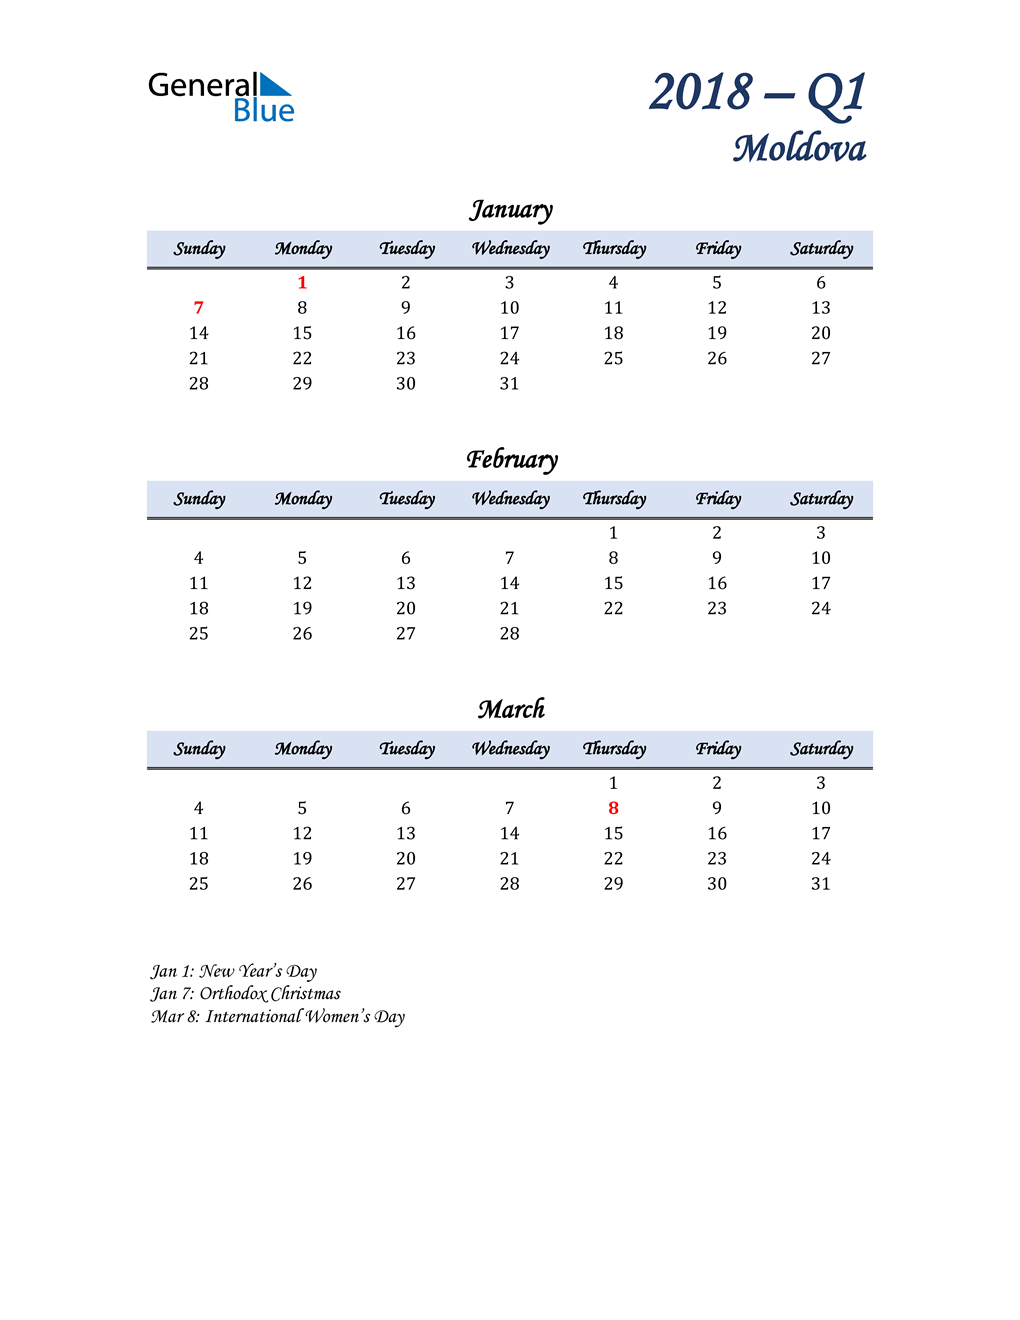  January, February, and March Calendar for Moldova